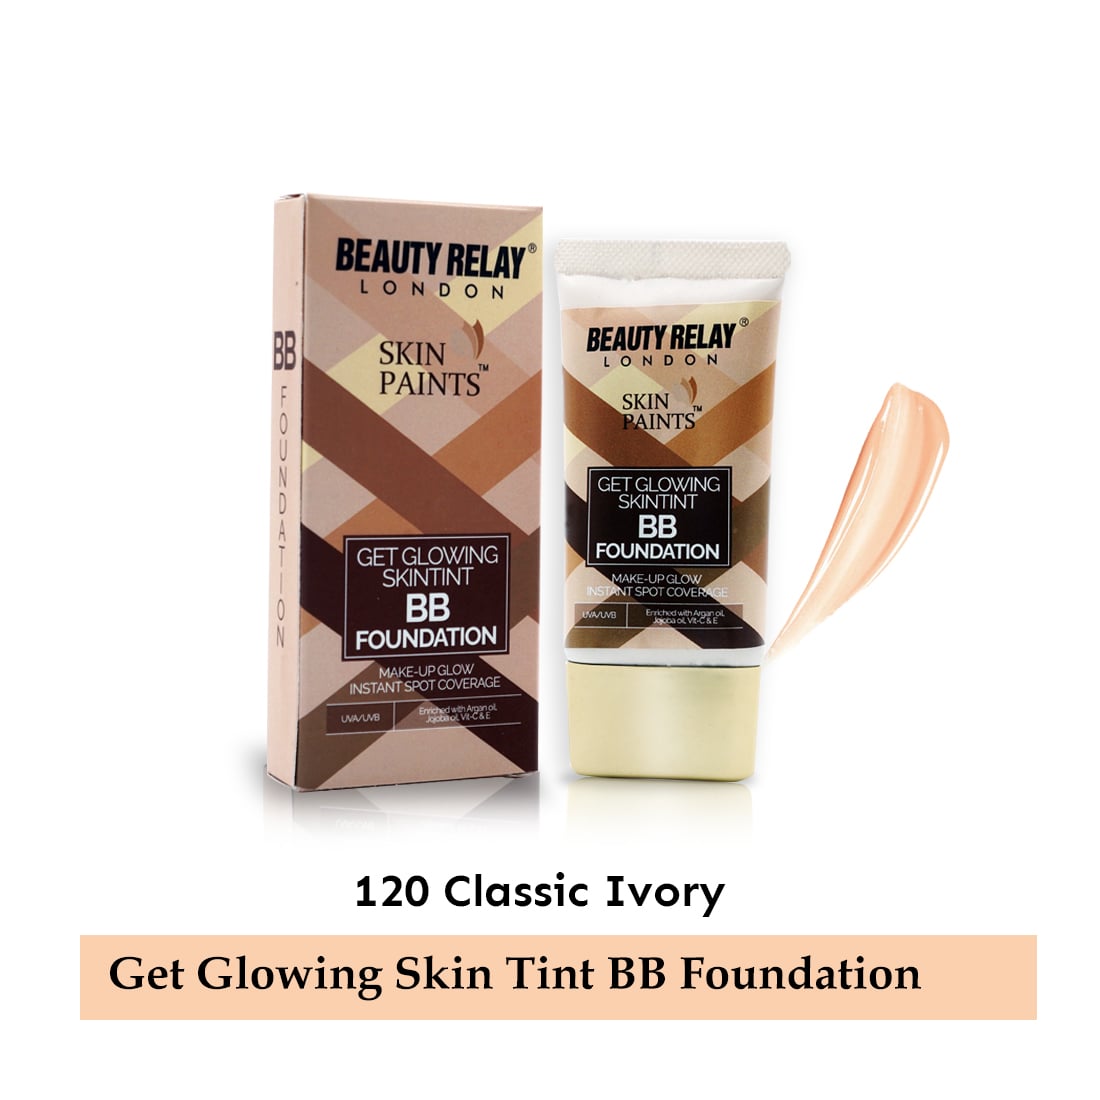 Get Glowing Skintint BB Foundation